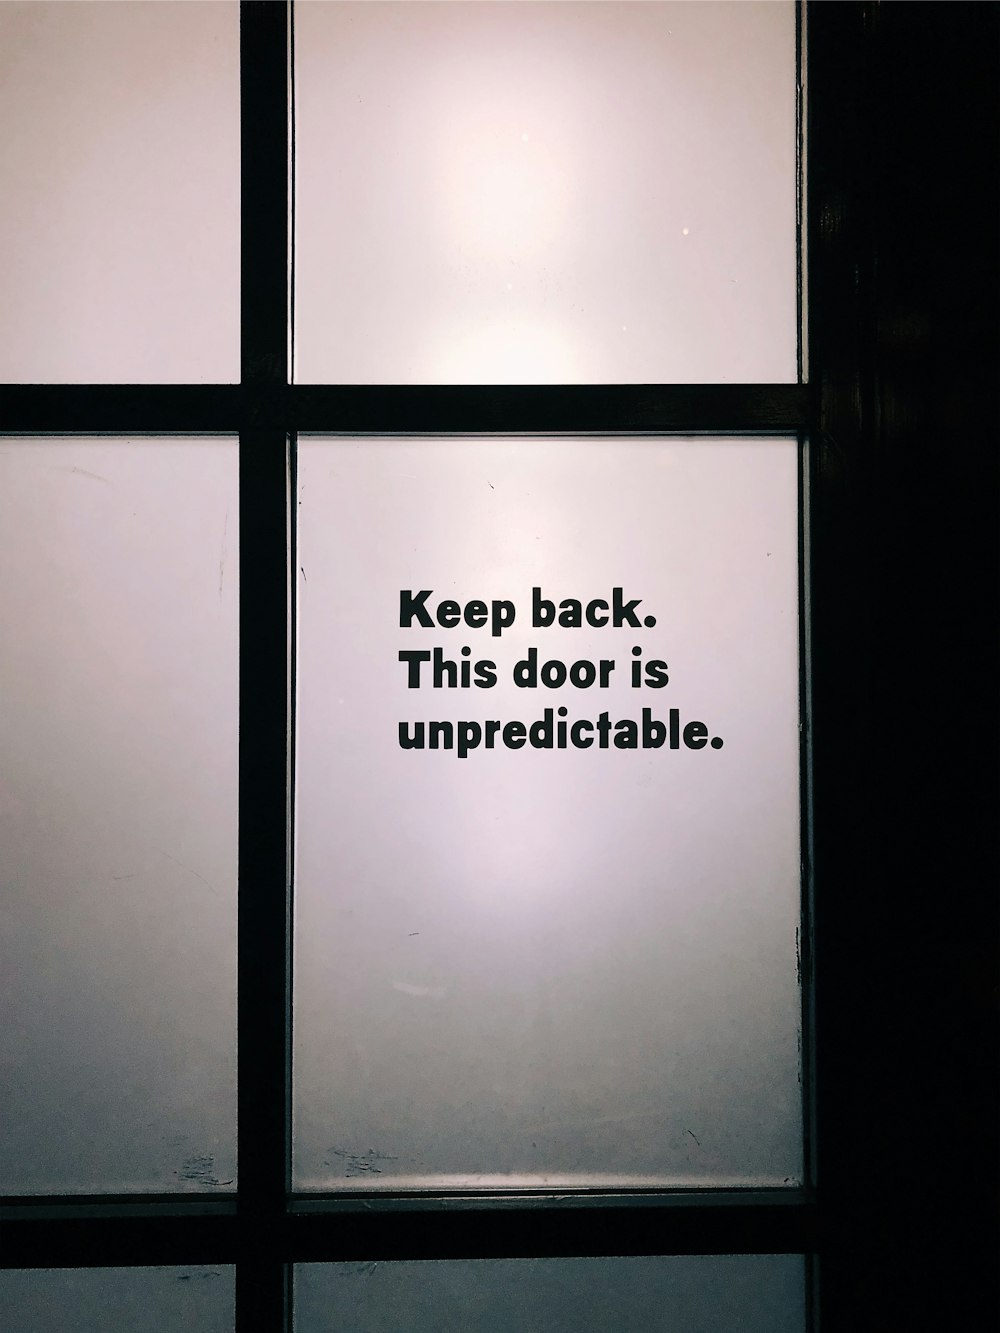 Keep back this door is unpredictable decals photo – Free Image on Unsplash